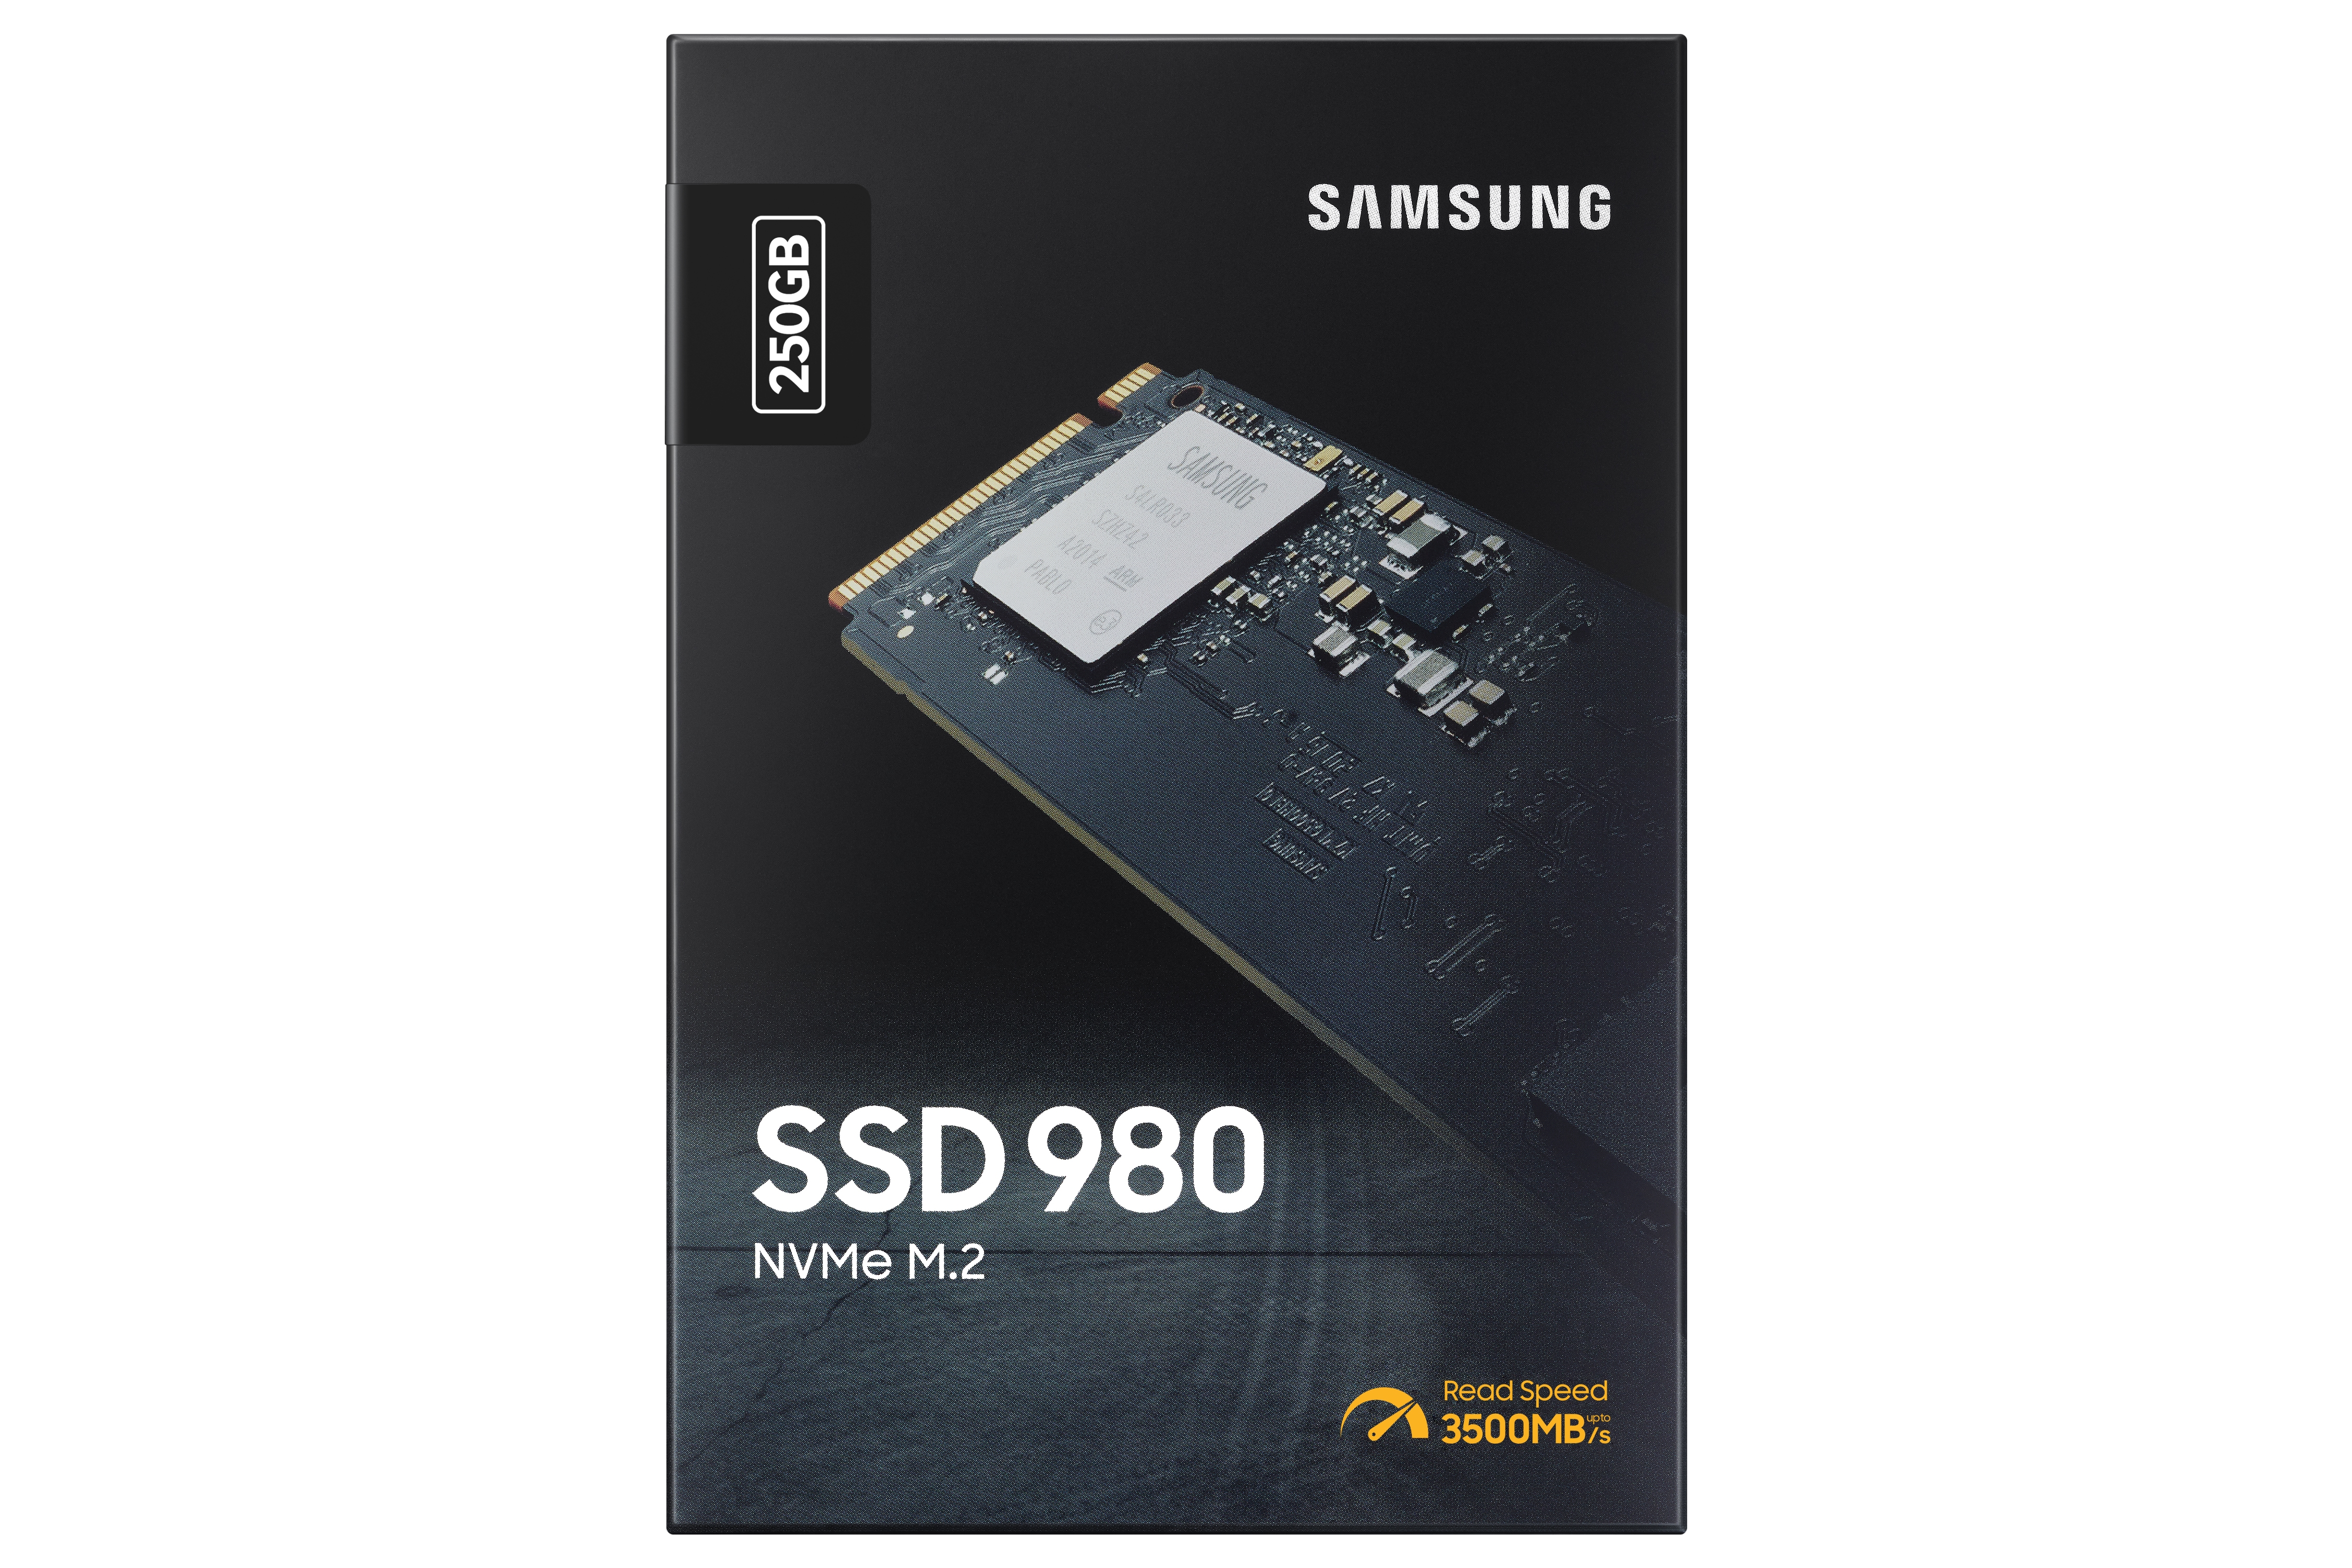 SAMSUNG 980 250 GB Laptop, Desktop Internal Solid State Drive (SSD